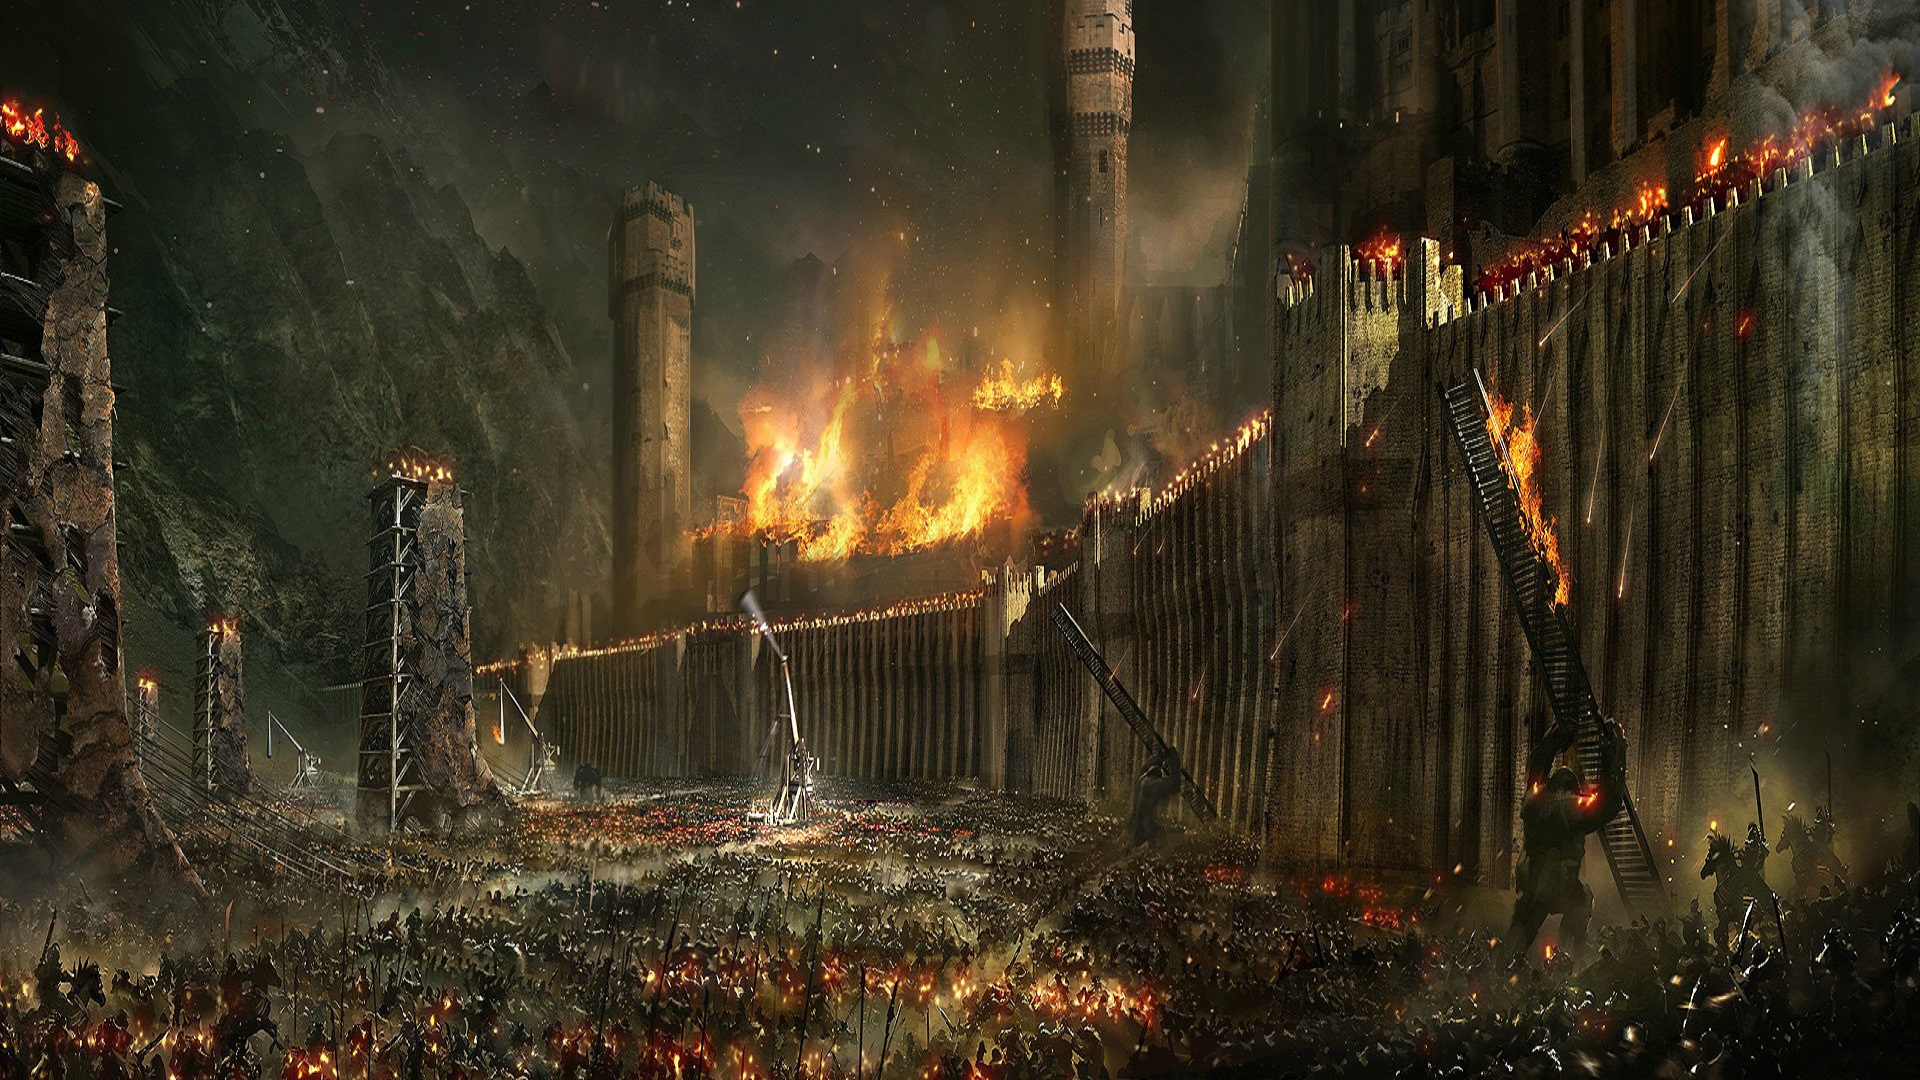 Minas Tirith The Great Citadel Of Gondor